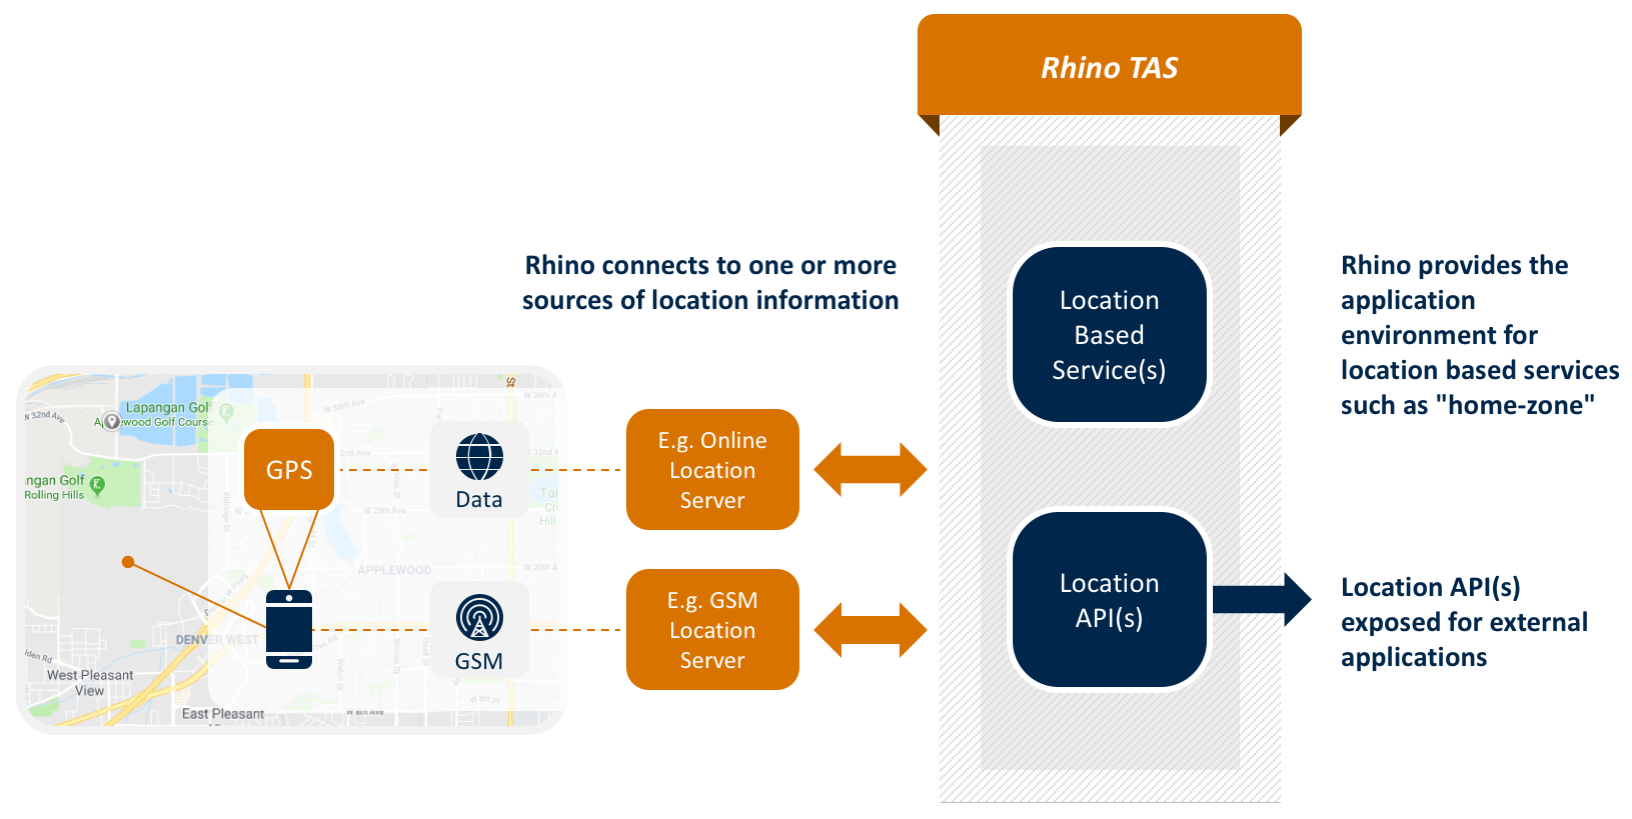 rhino-tas-app-location-based-services-platform